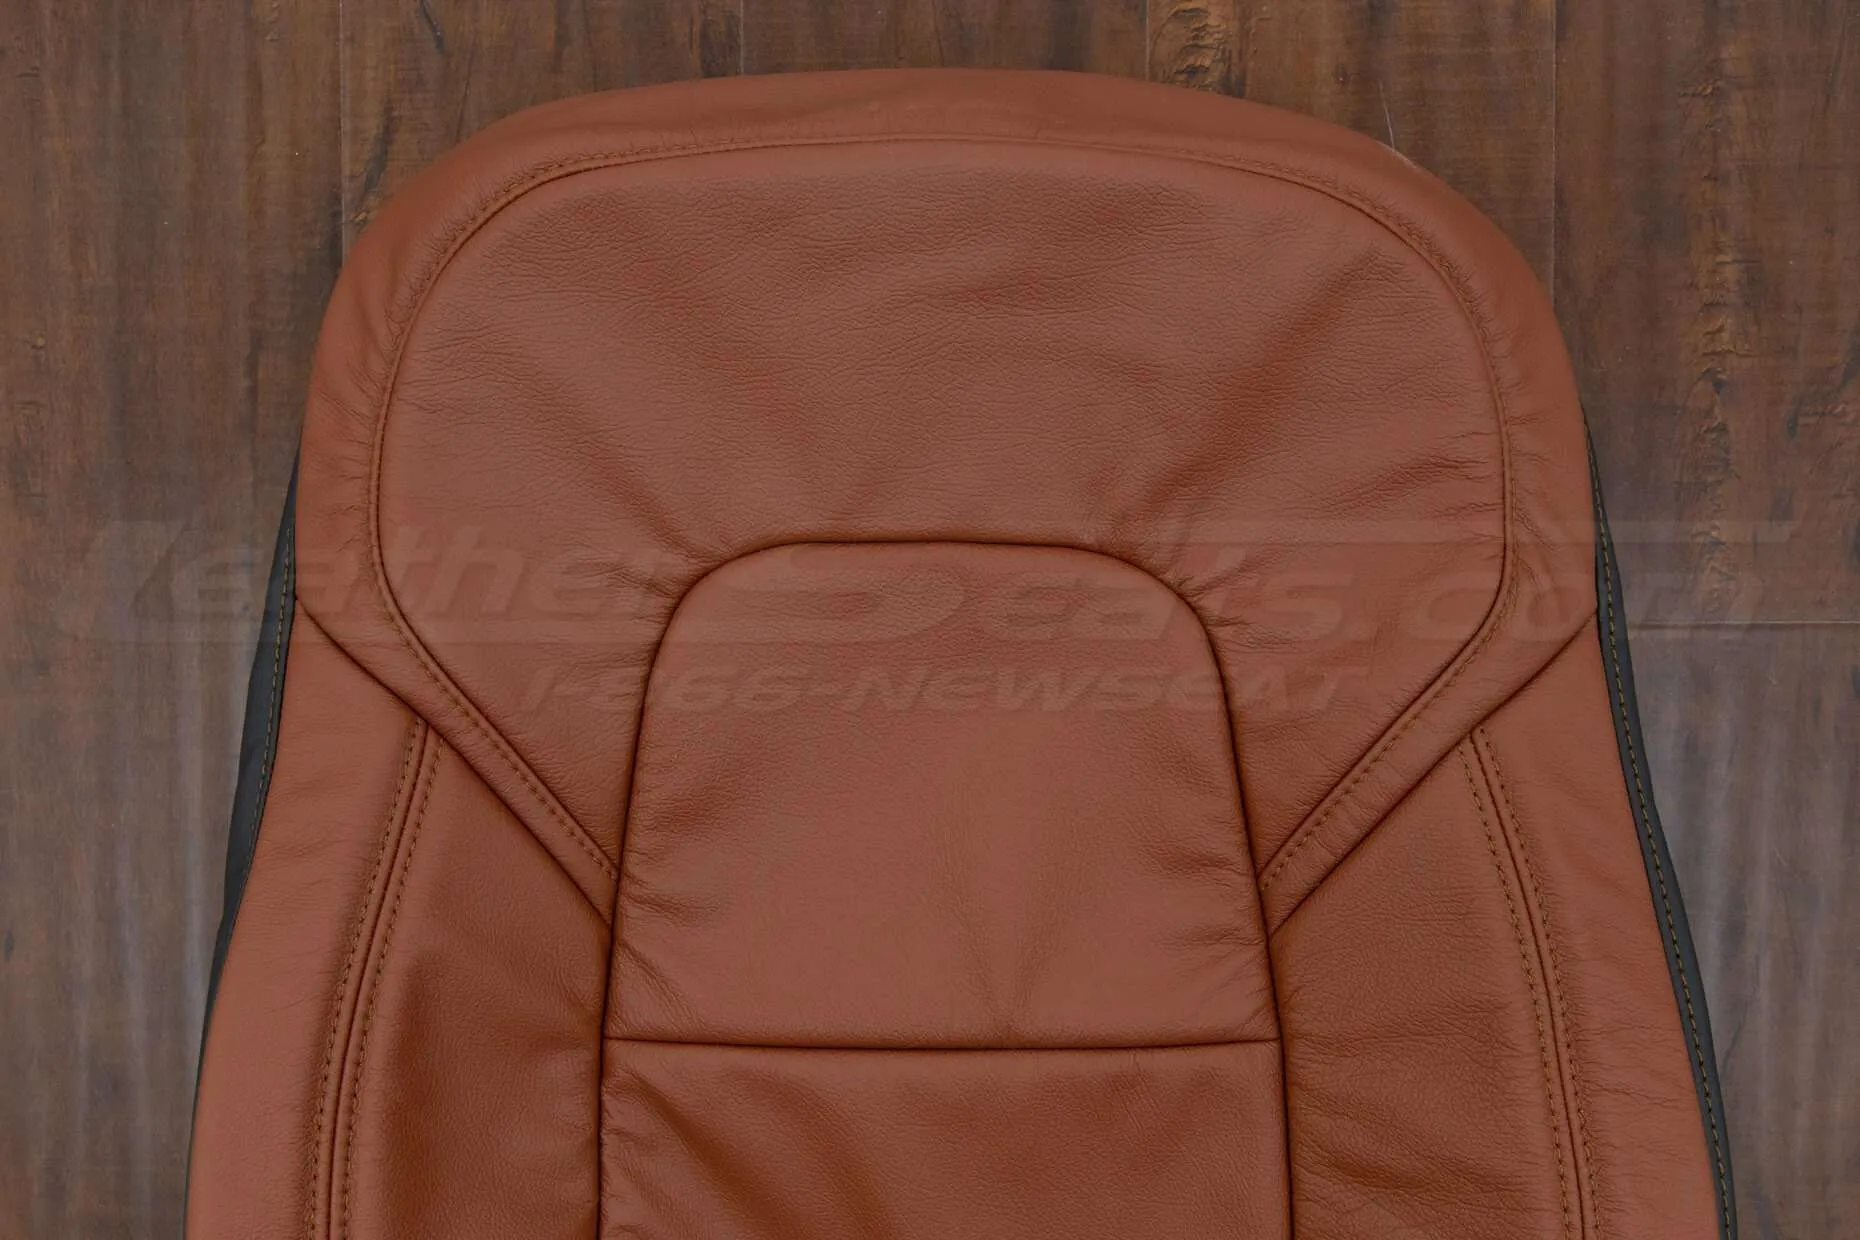 Tesla Model 3 Leather Seats - Mitt Brown - Upper section of front backrest